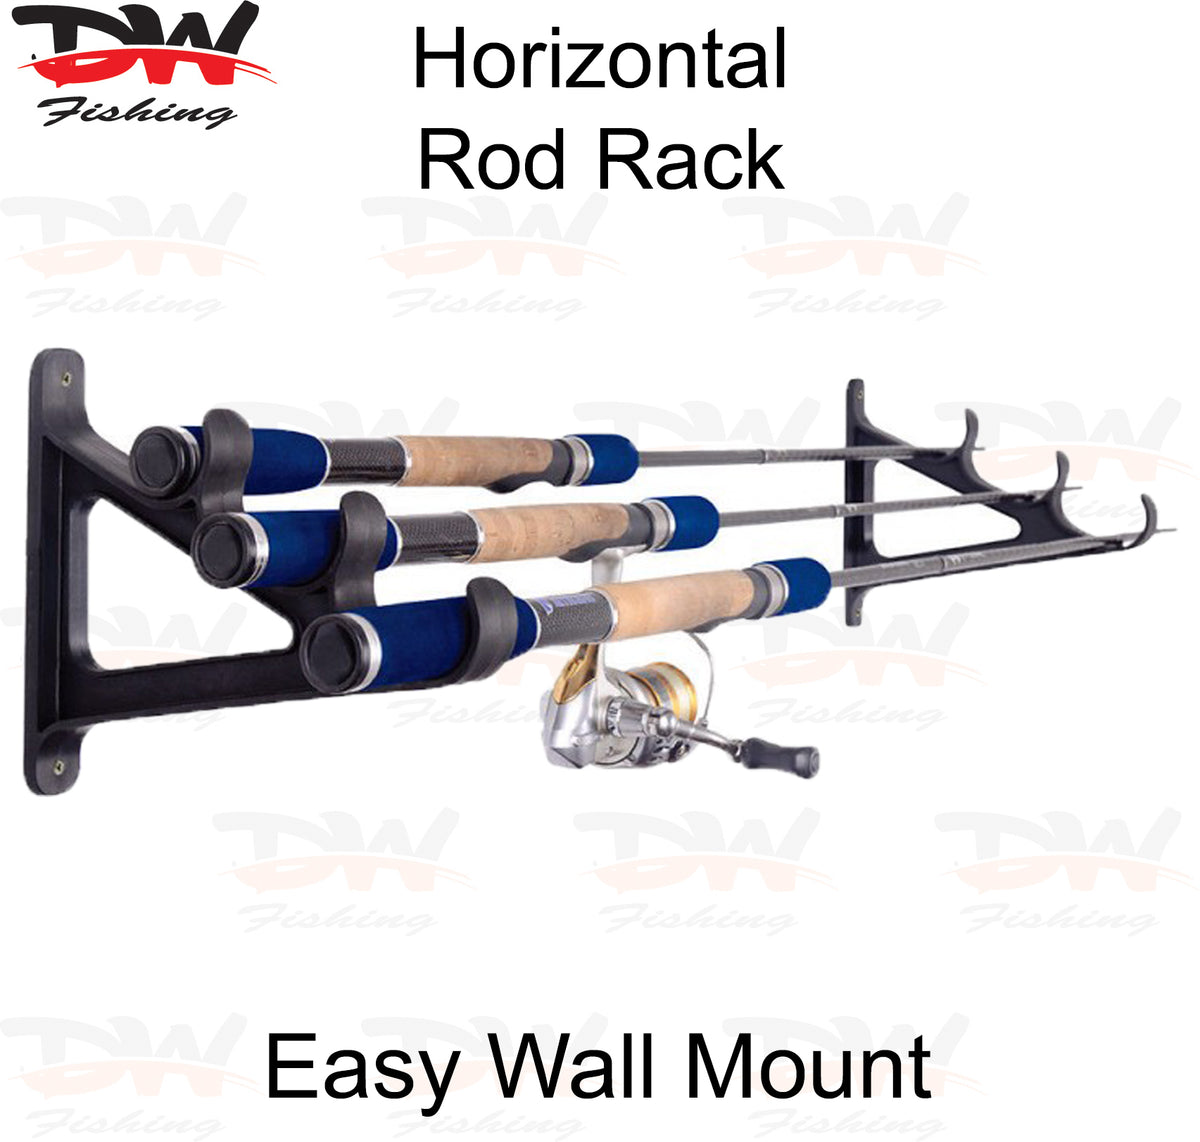 Horizontal Wall Mount Rod holder | Fishing Tackle | Dave's Tackle Bag